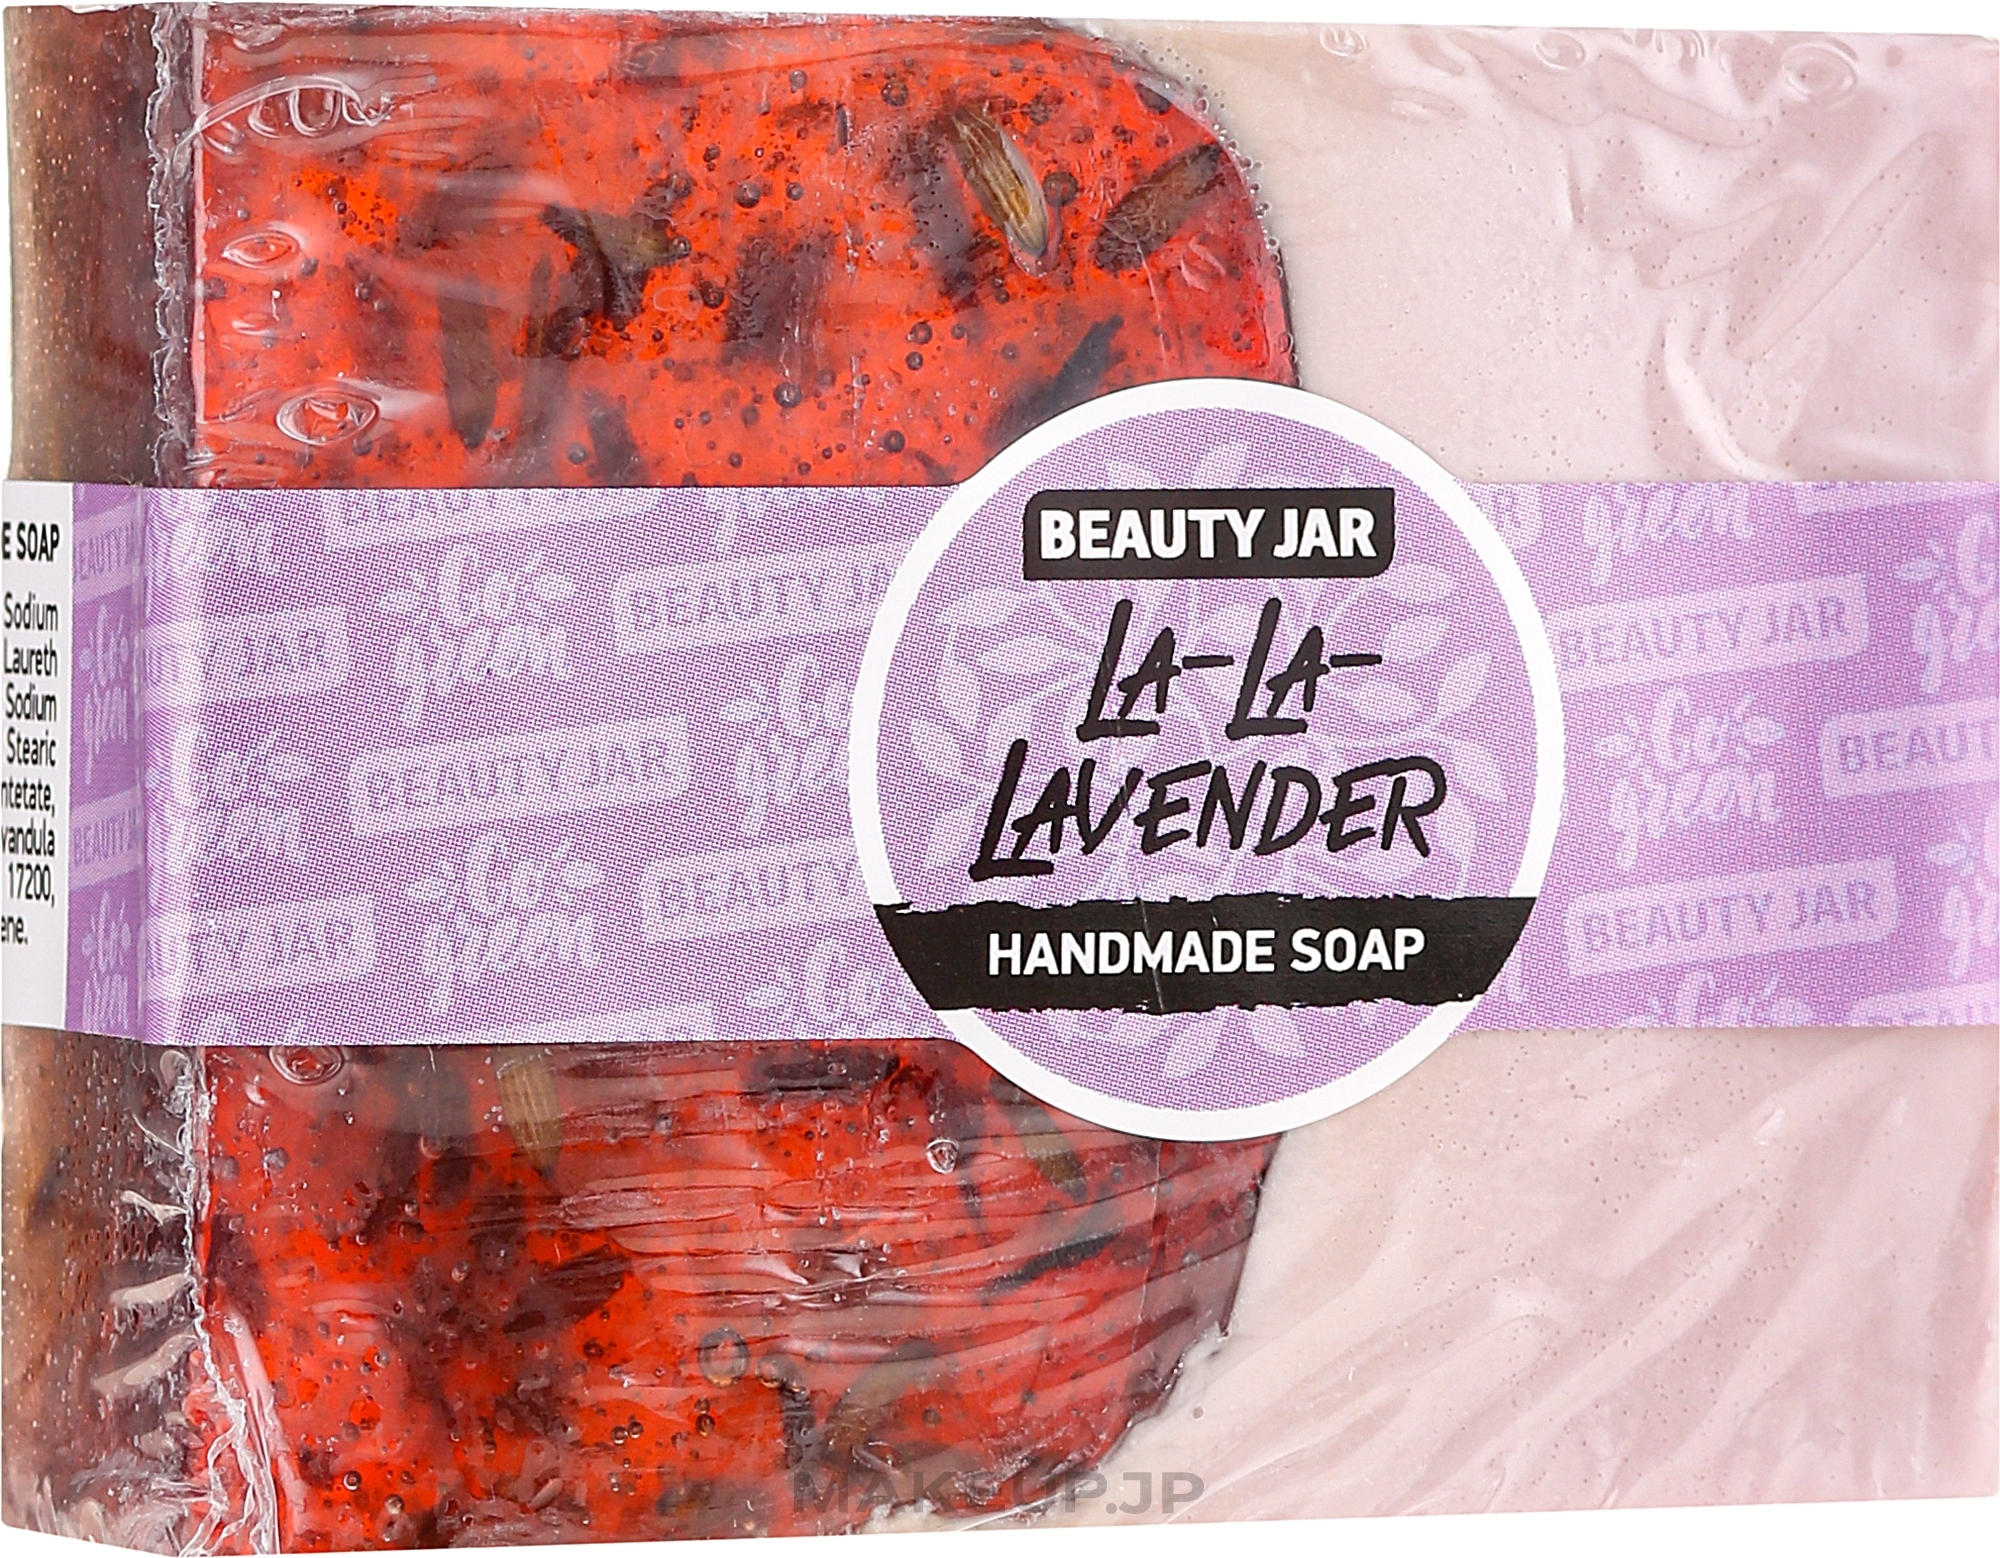 Handmade Soap "Lavender" - Beauty Jar Lavender Handmade Soap — photo 90 g